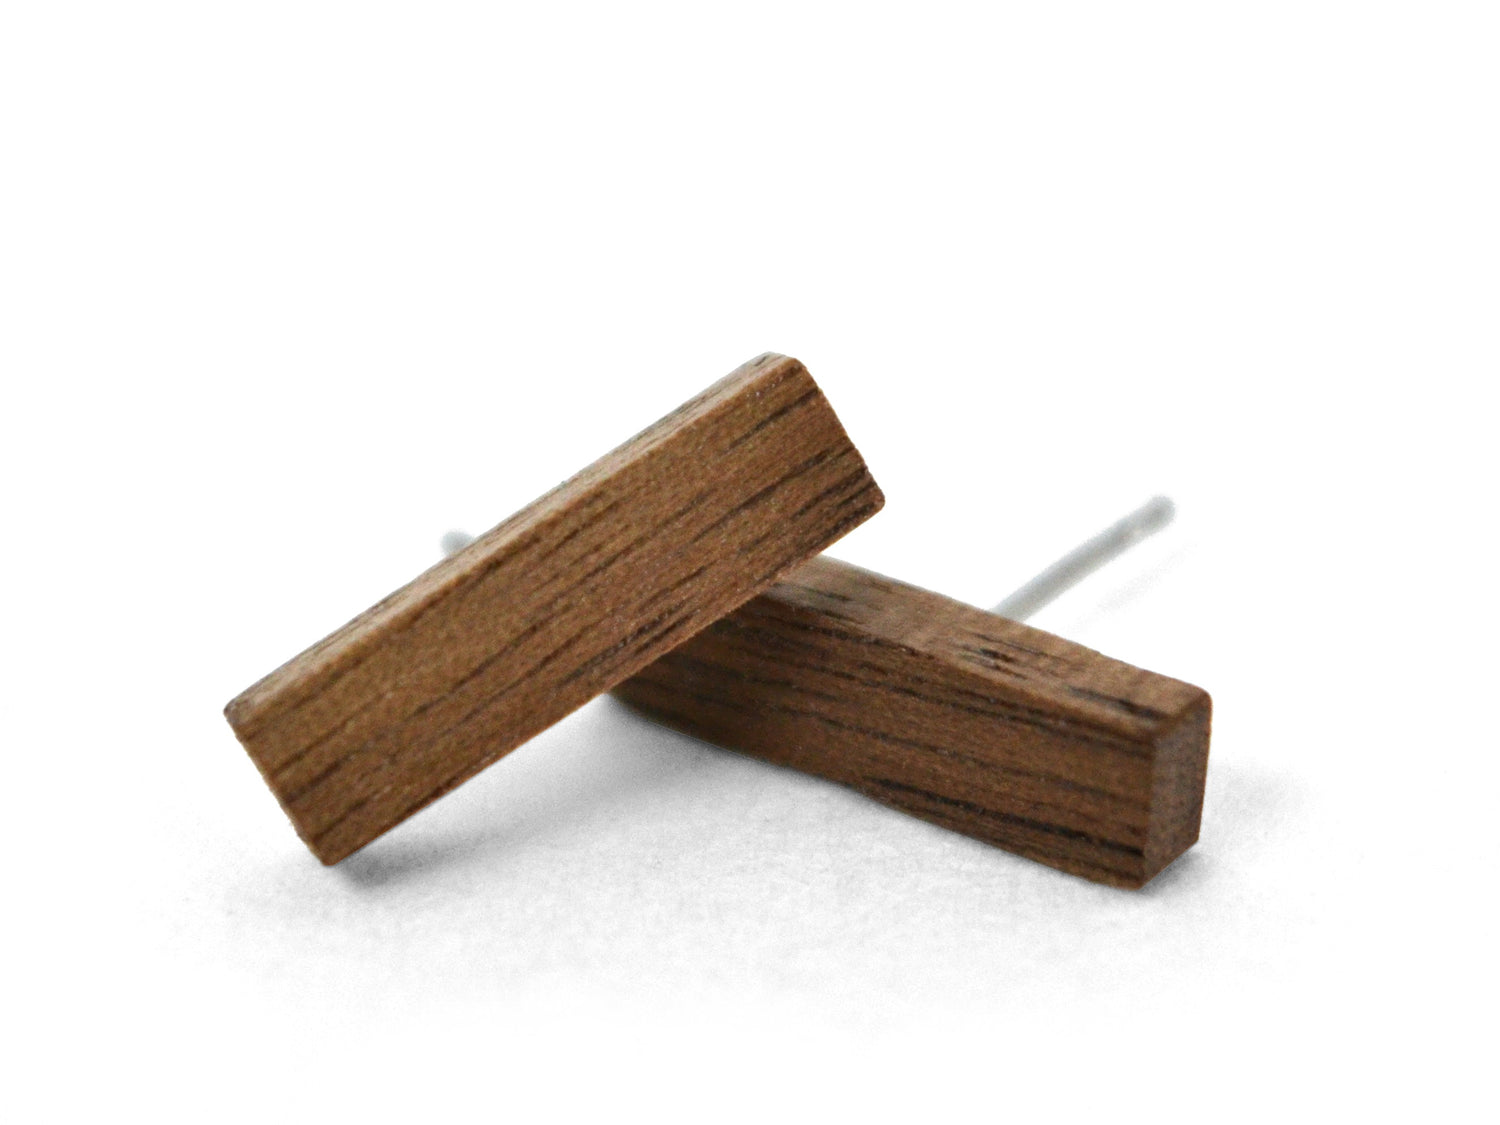 dark walnut bar stud earrings, pair of walnut wood bar shaped studs